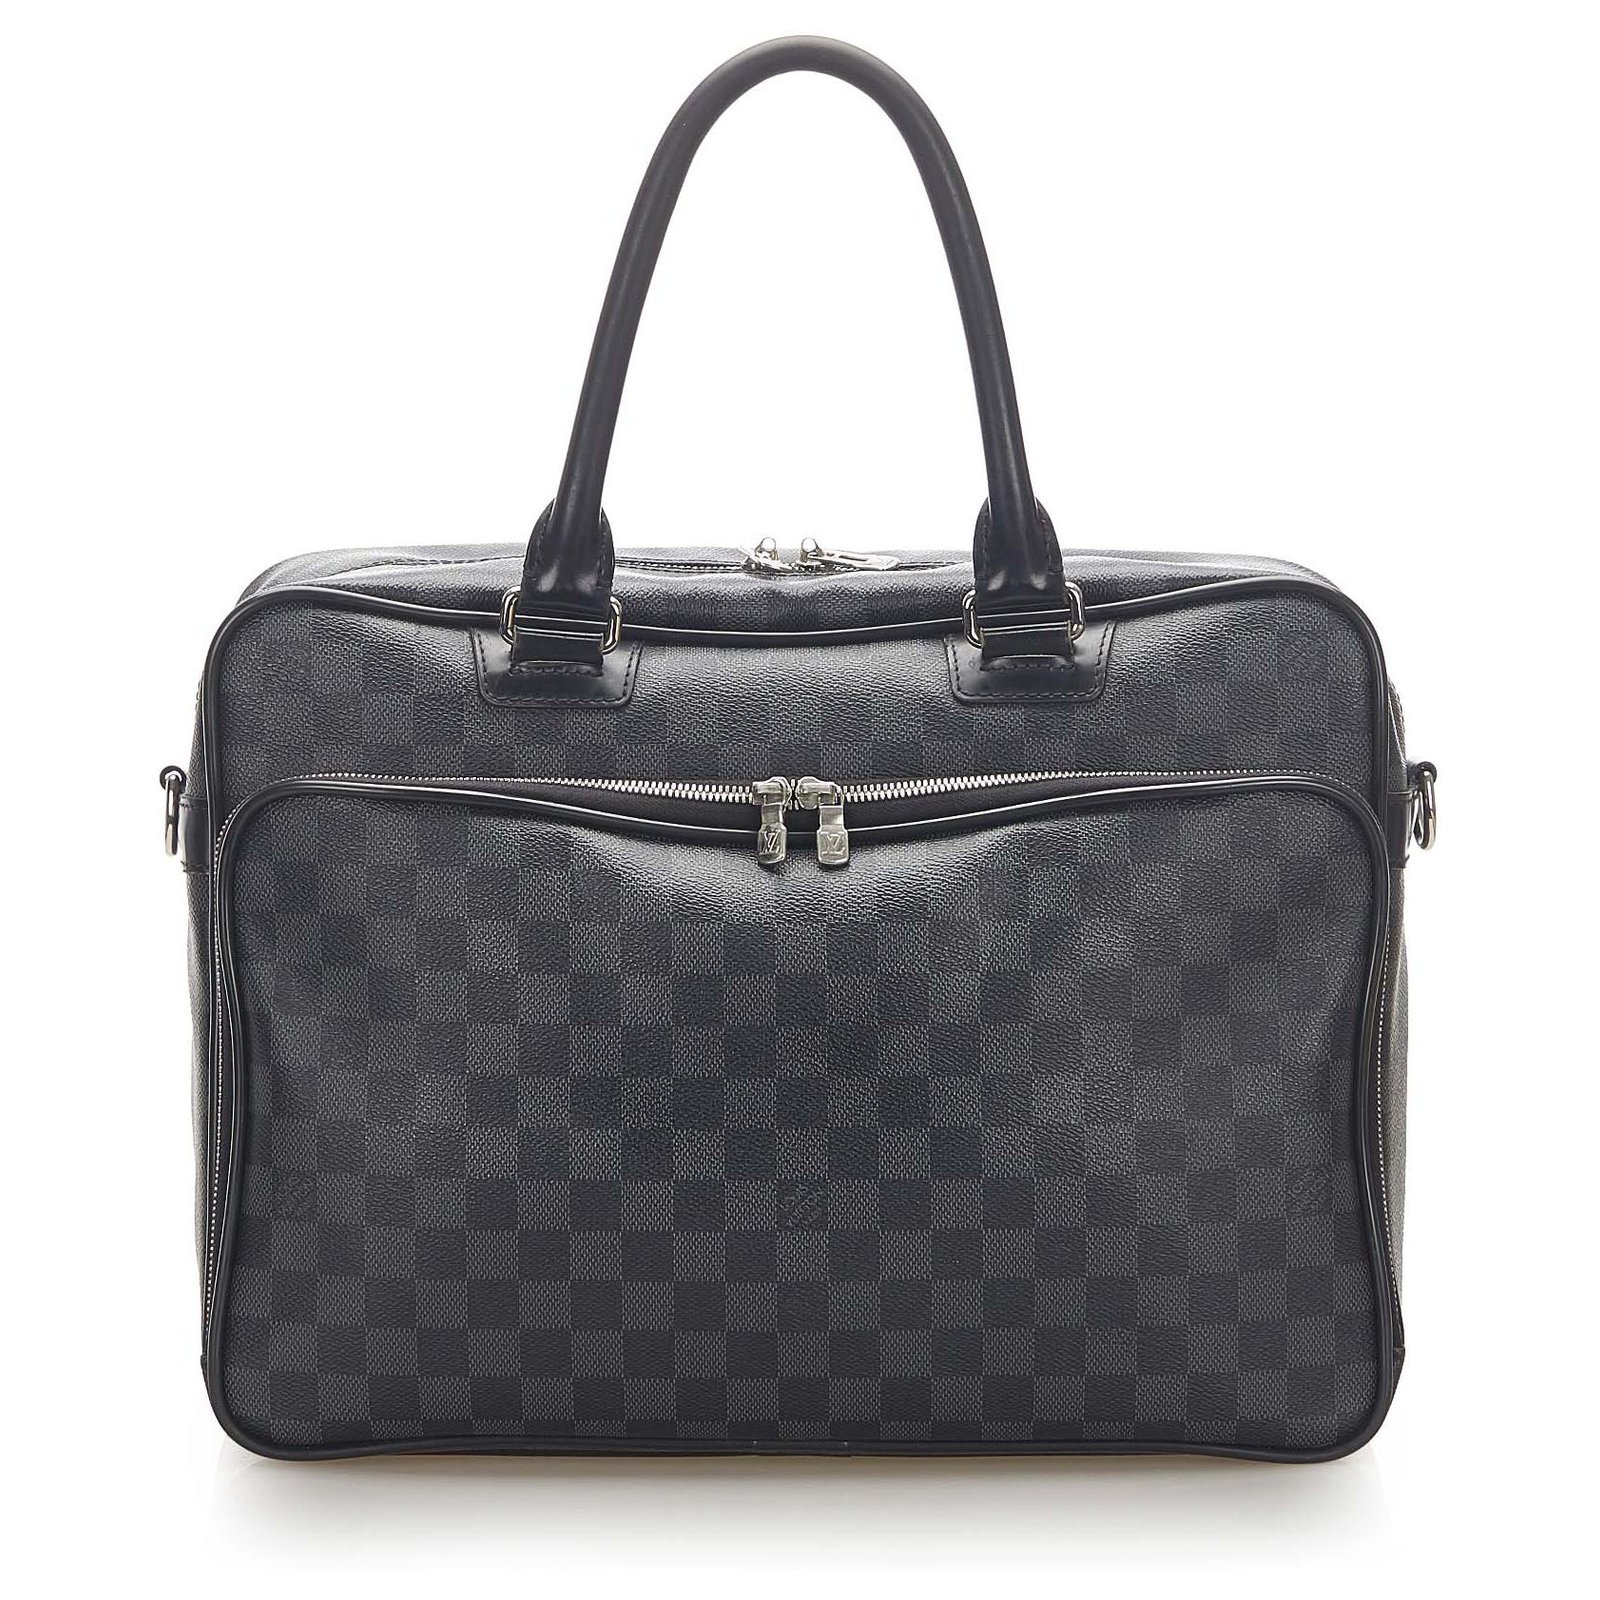 Best Louis Vuitton Computer Bag For Women | semashow.com